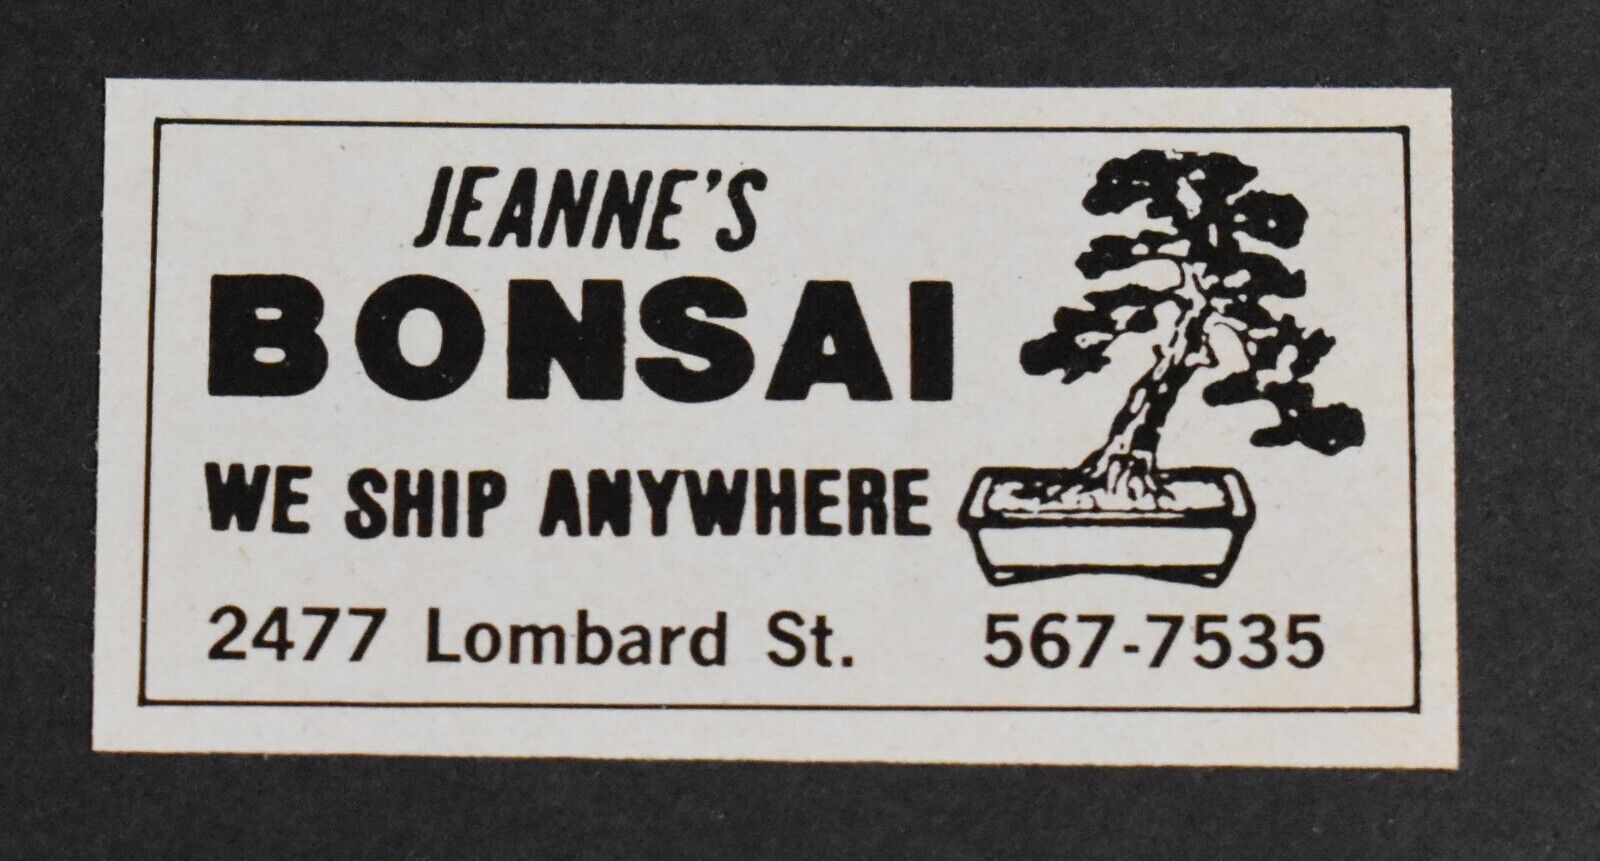 1979 Print Ad San Francisco Jeanne's Bonsai 2477 Lombard St We Ship Anywhere art